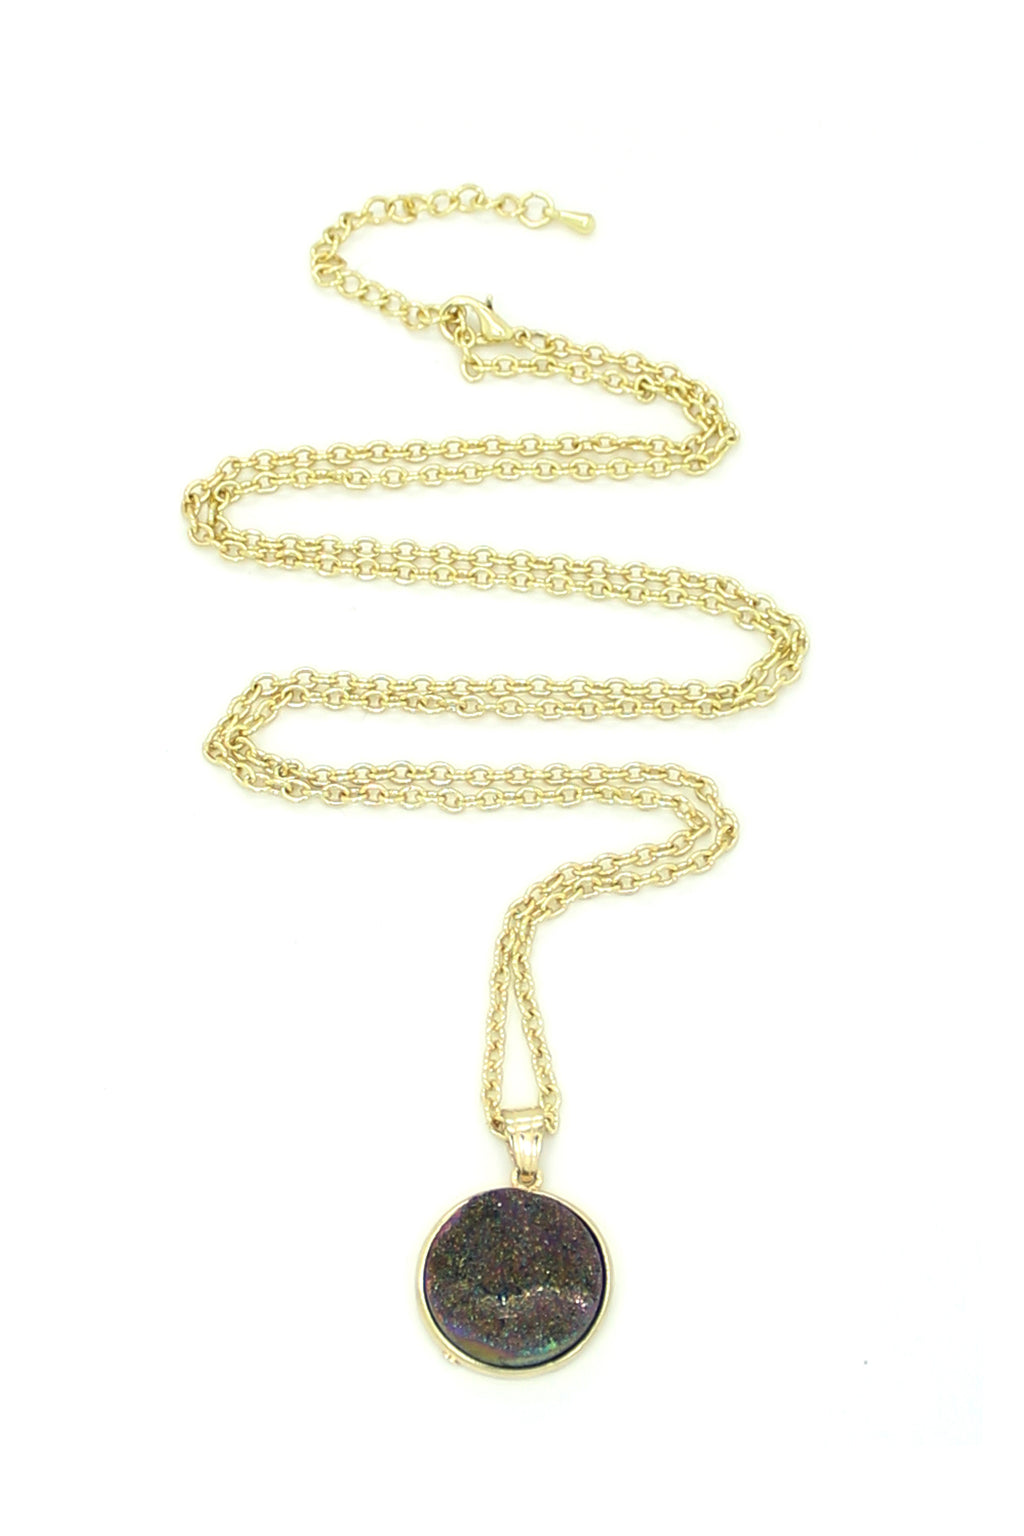 Natural druzy stone pendant necklace.